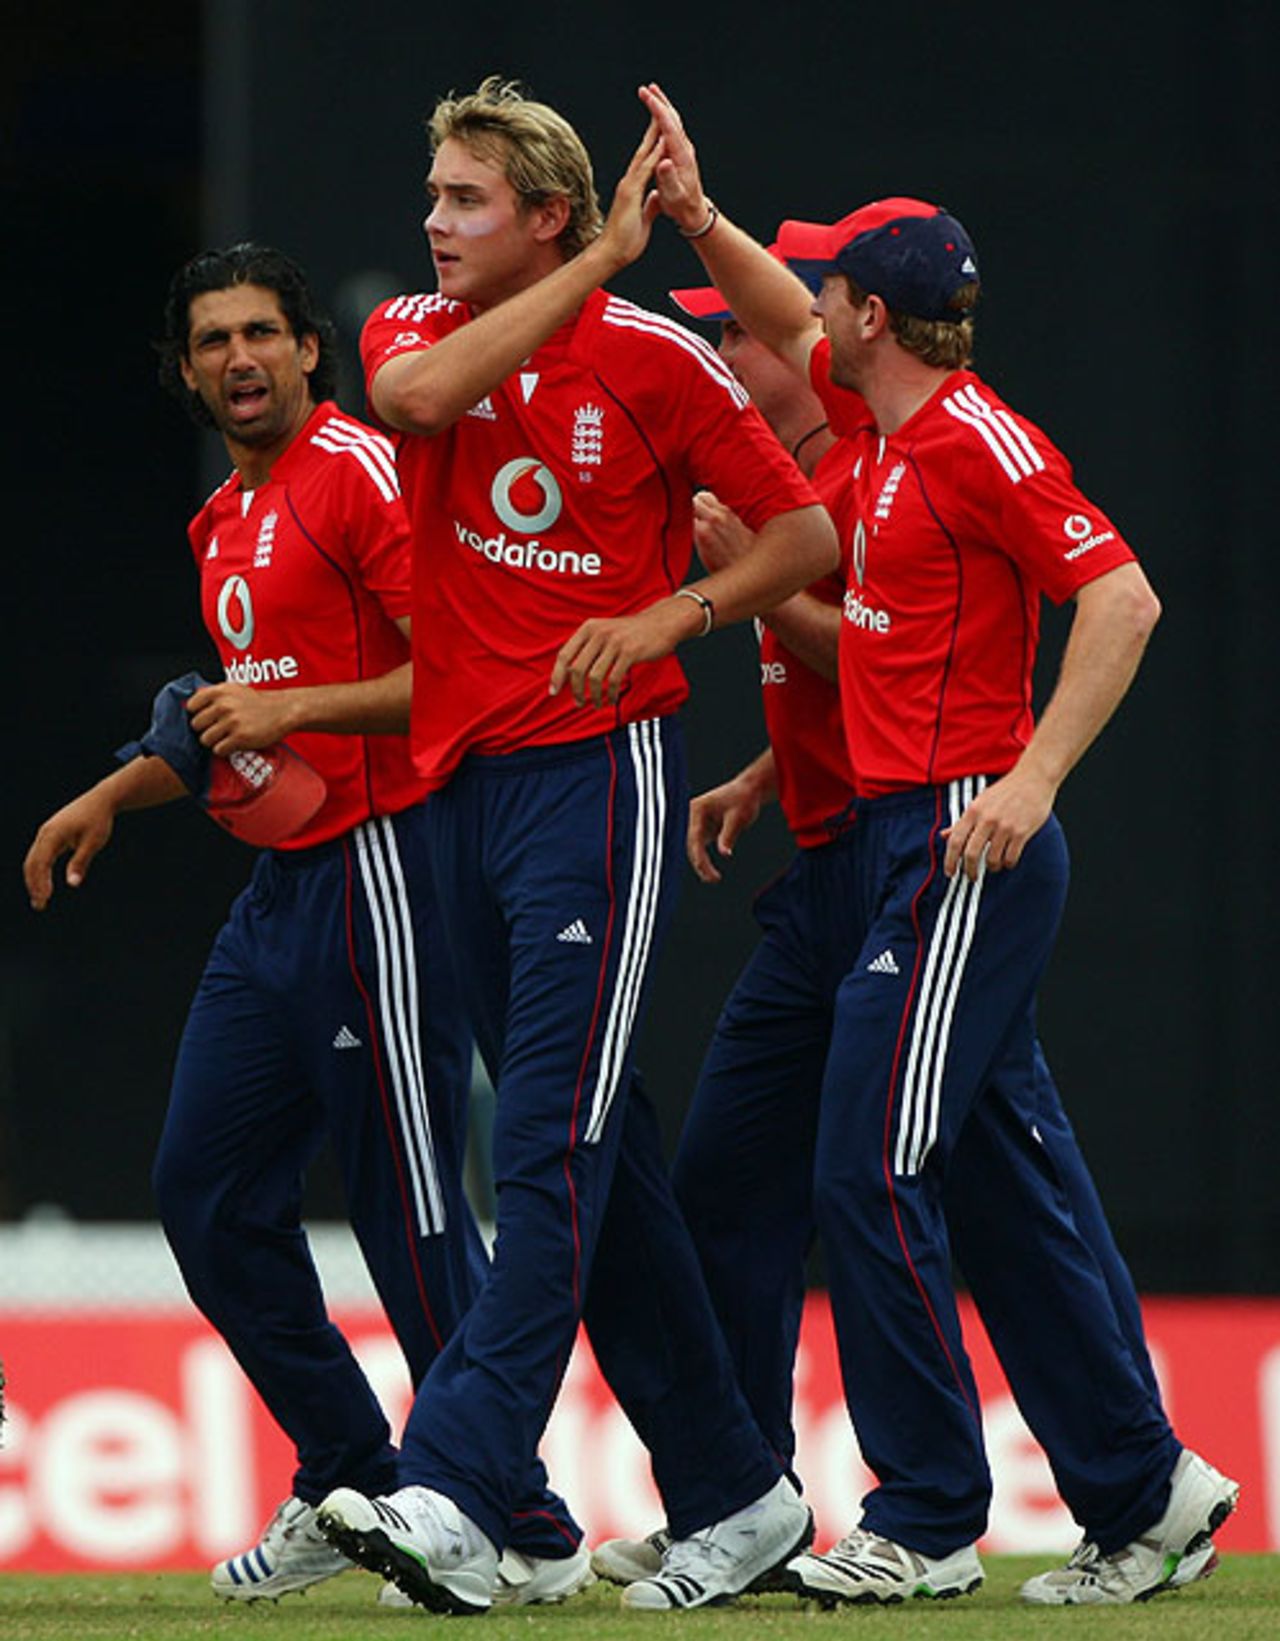 Stuart Broad claims the wicket of Andre Fletcher, West Indies v England, Twenty20 international, Trinidad, March 15, 2009